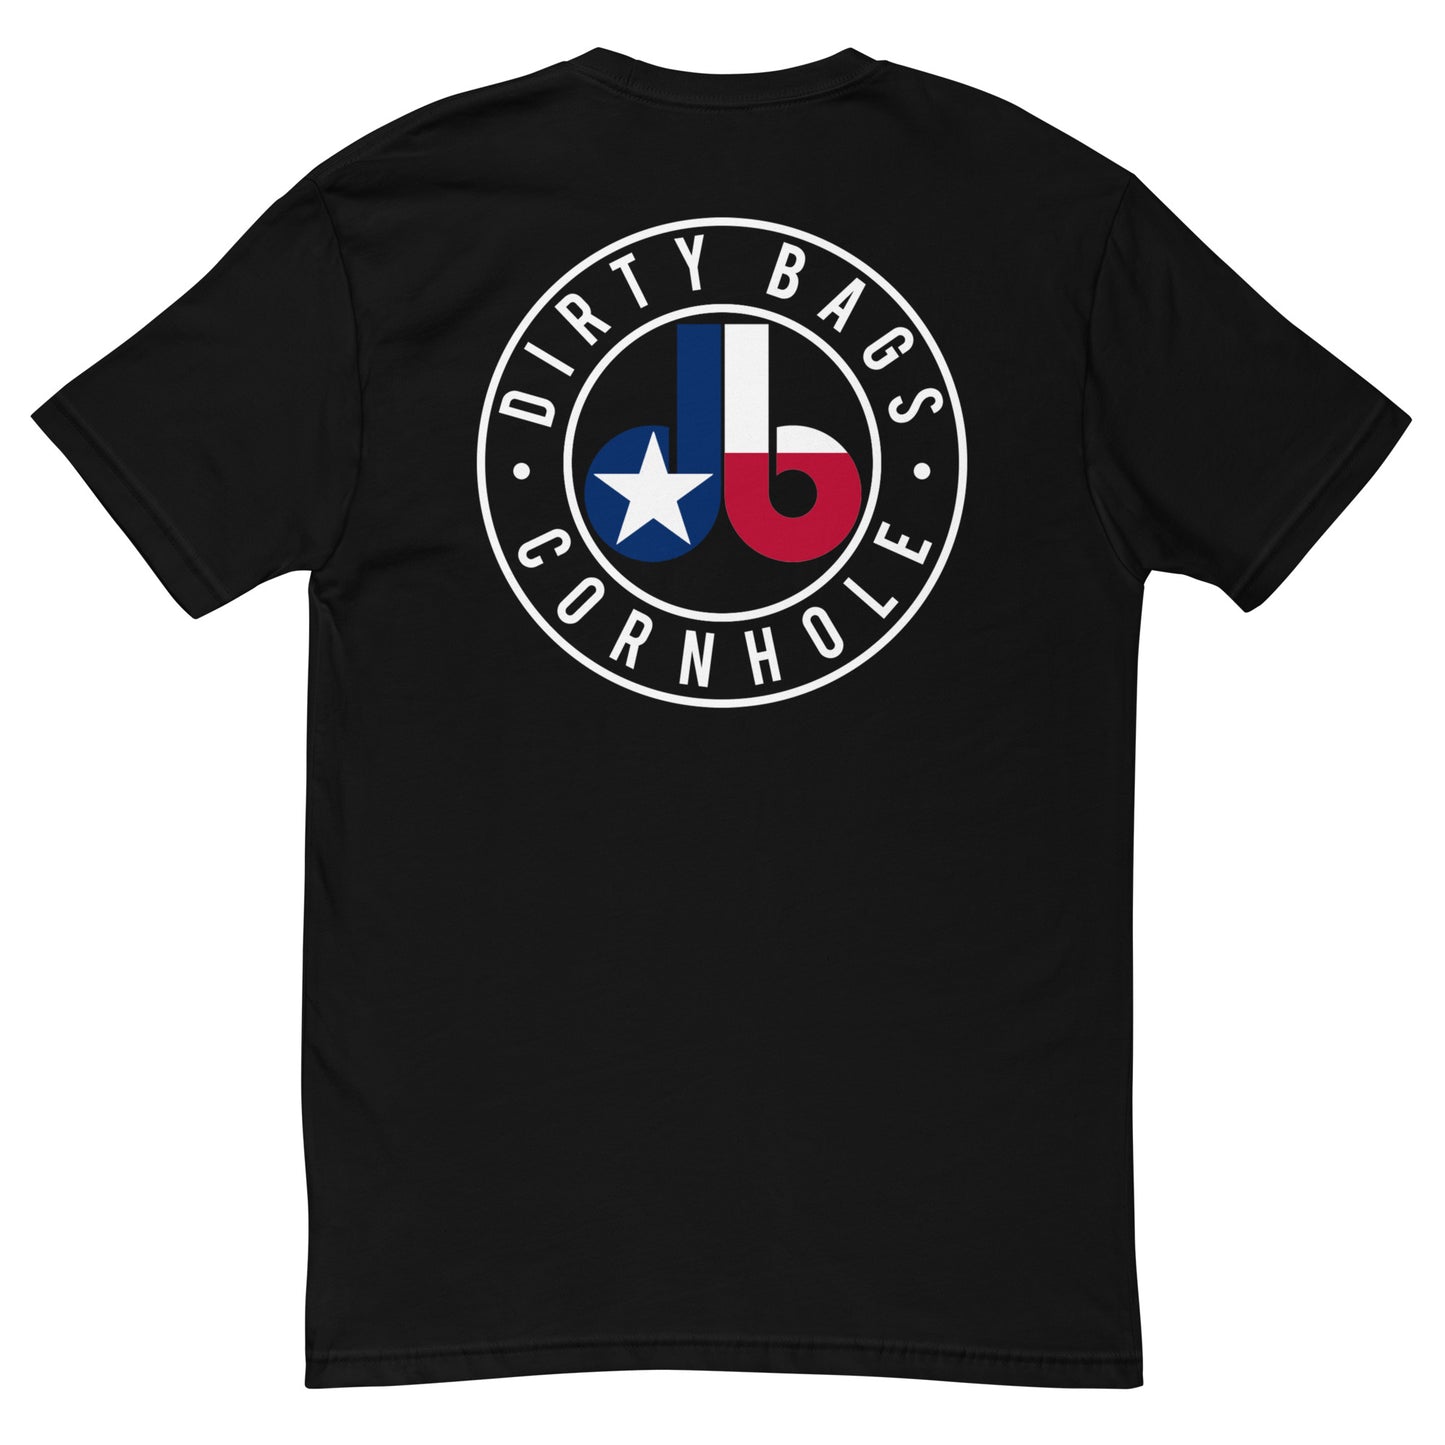 Cornhole State db Shirts - Texas